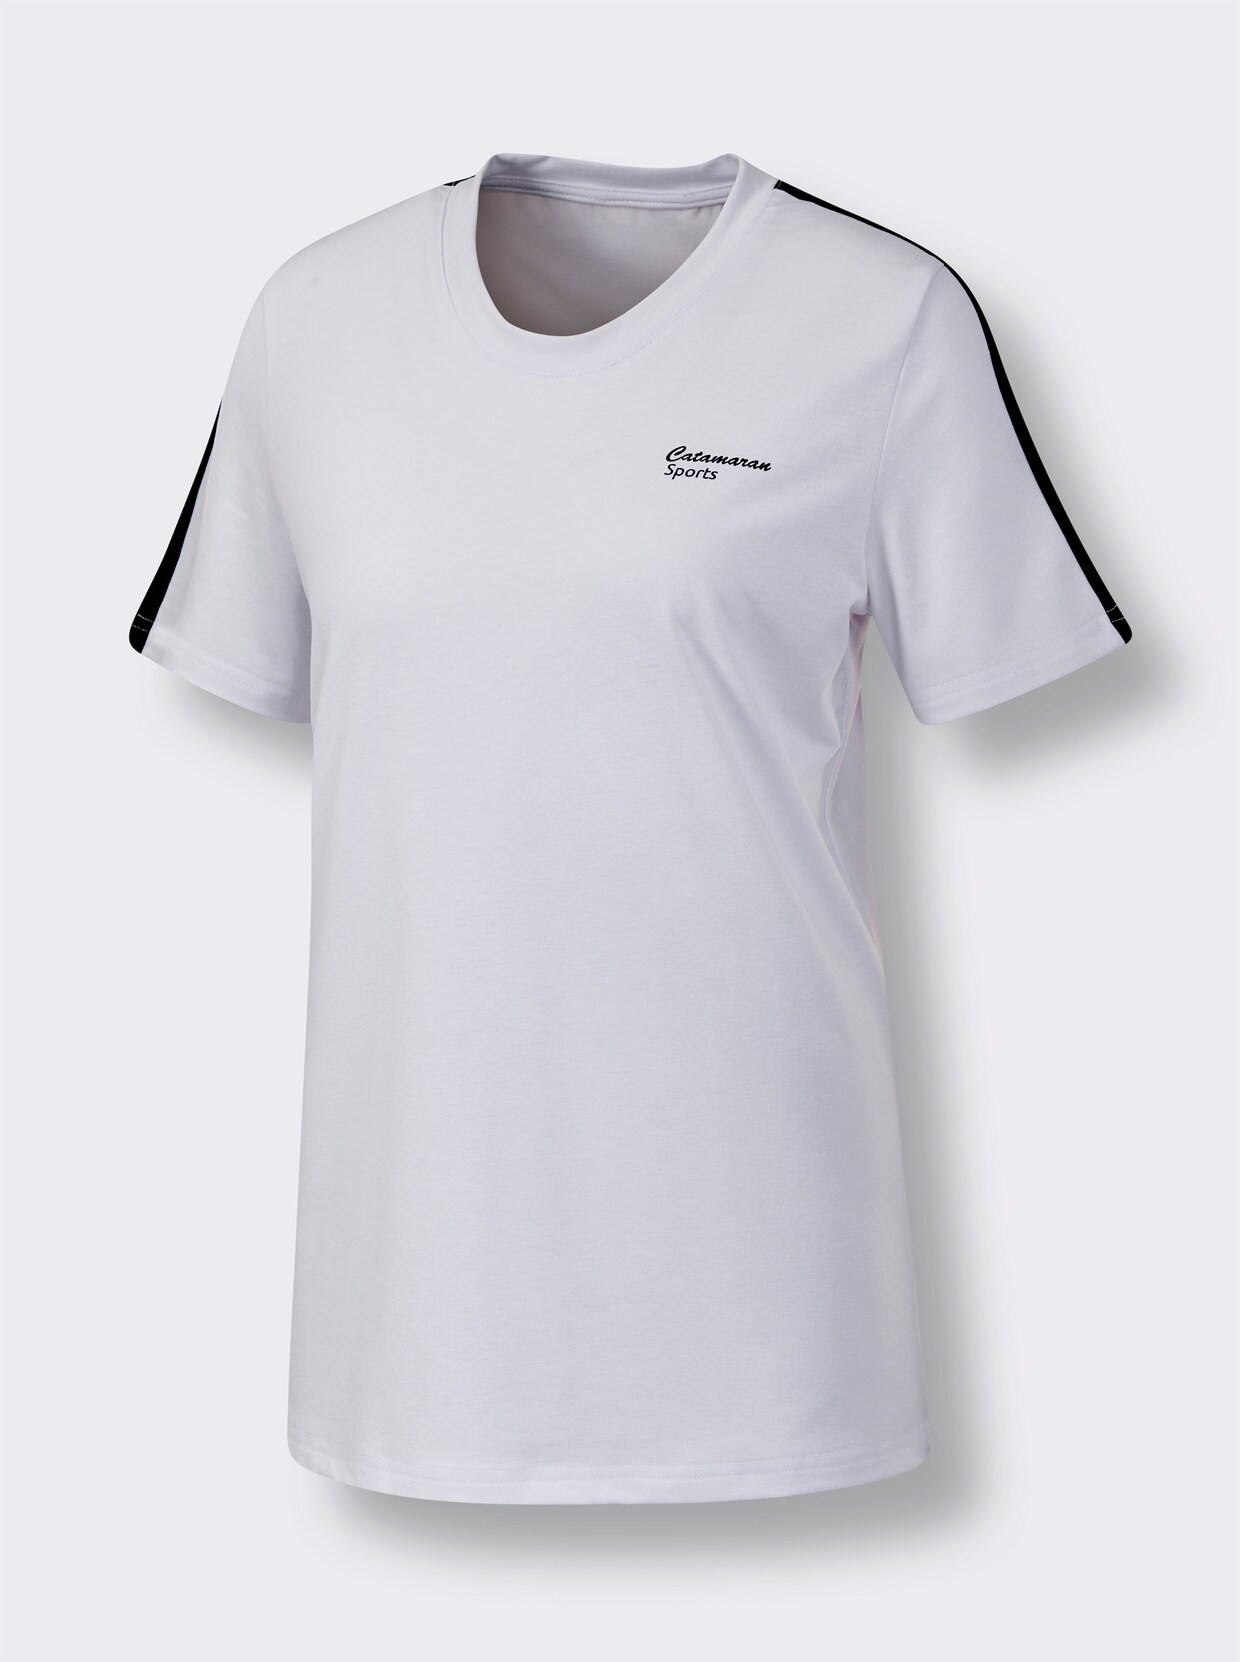 Catamaran Sports Funktions-Shirt - weiß-schwarz